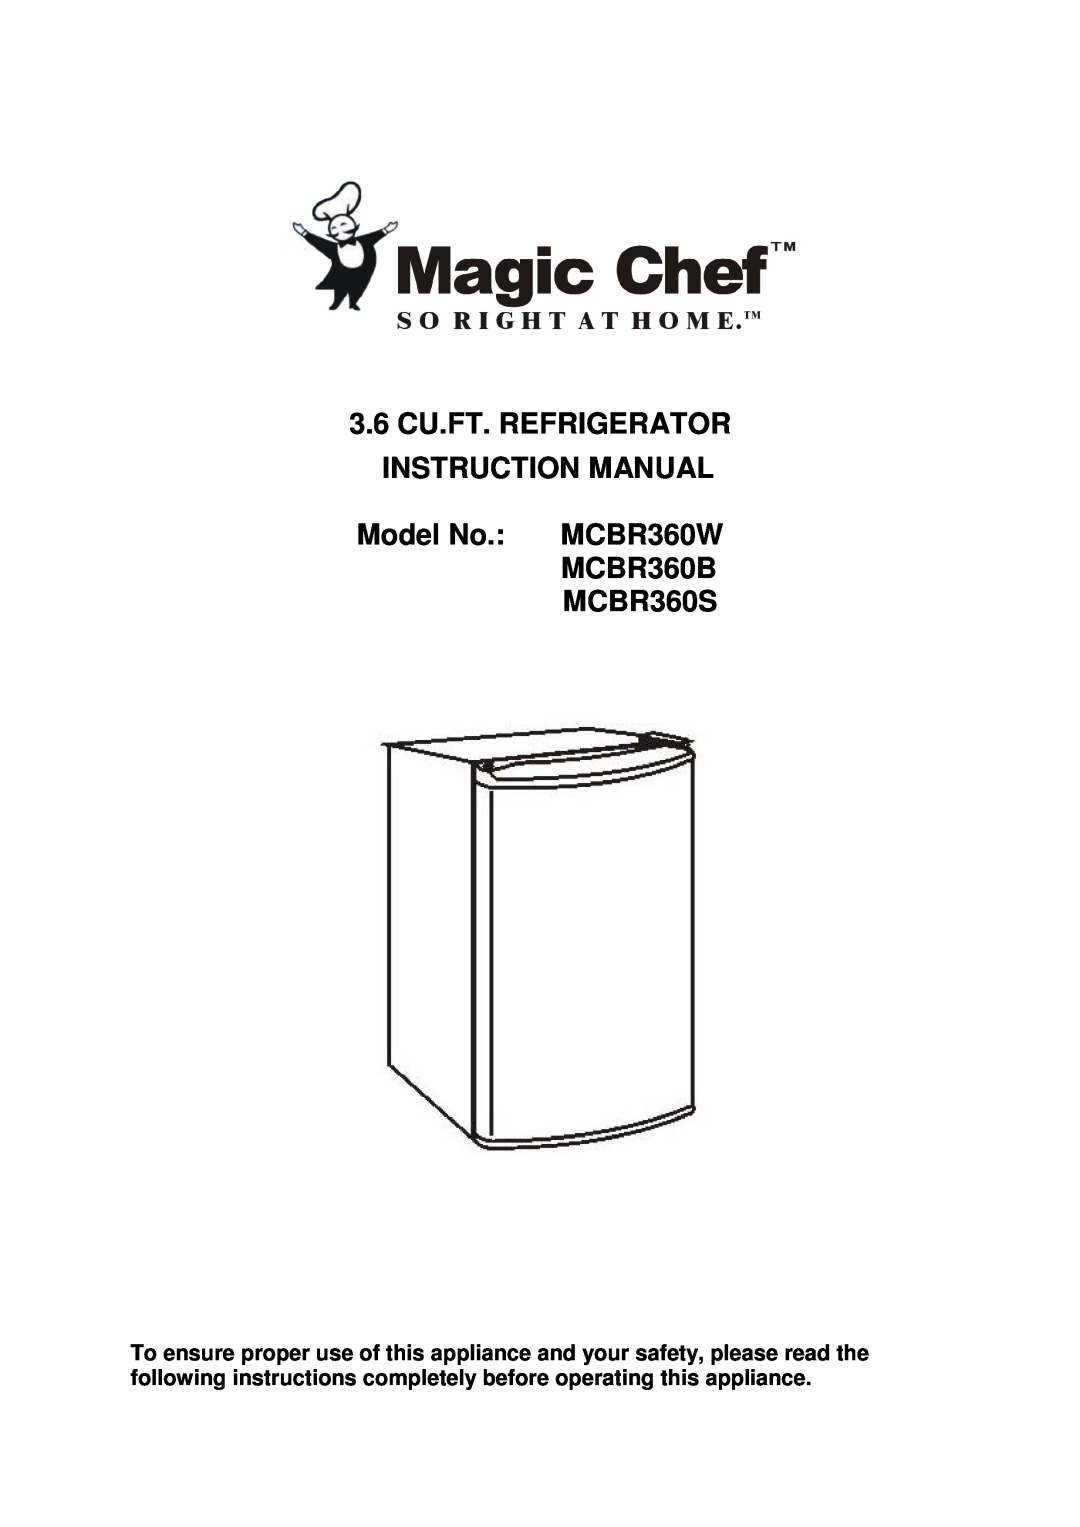 Magic Chef instruction manual 3.6CU.FT. REFRIGERATOR INSTRUCTION MANUAL, Model No. MCBR360W MCBR360B MCBR360S 